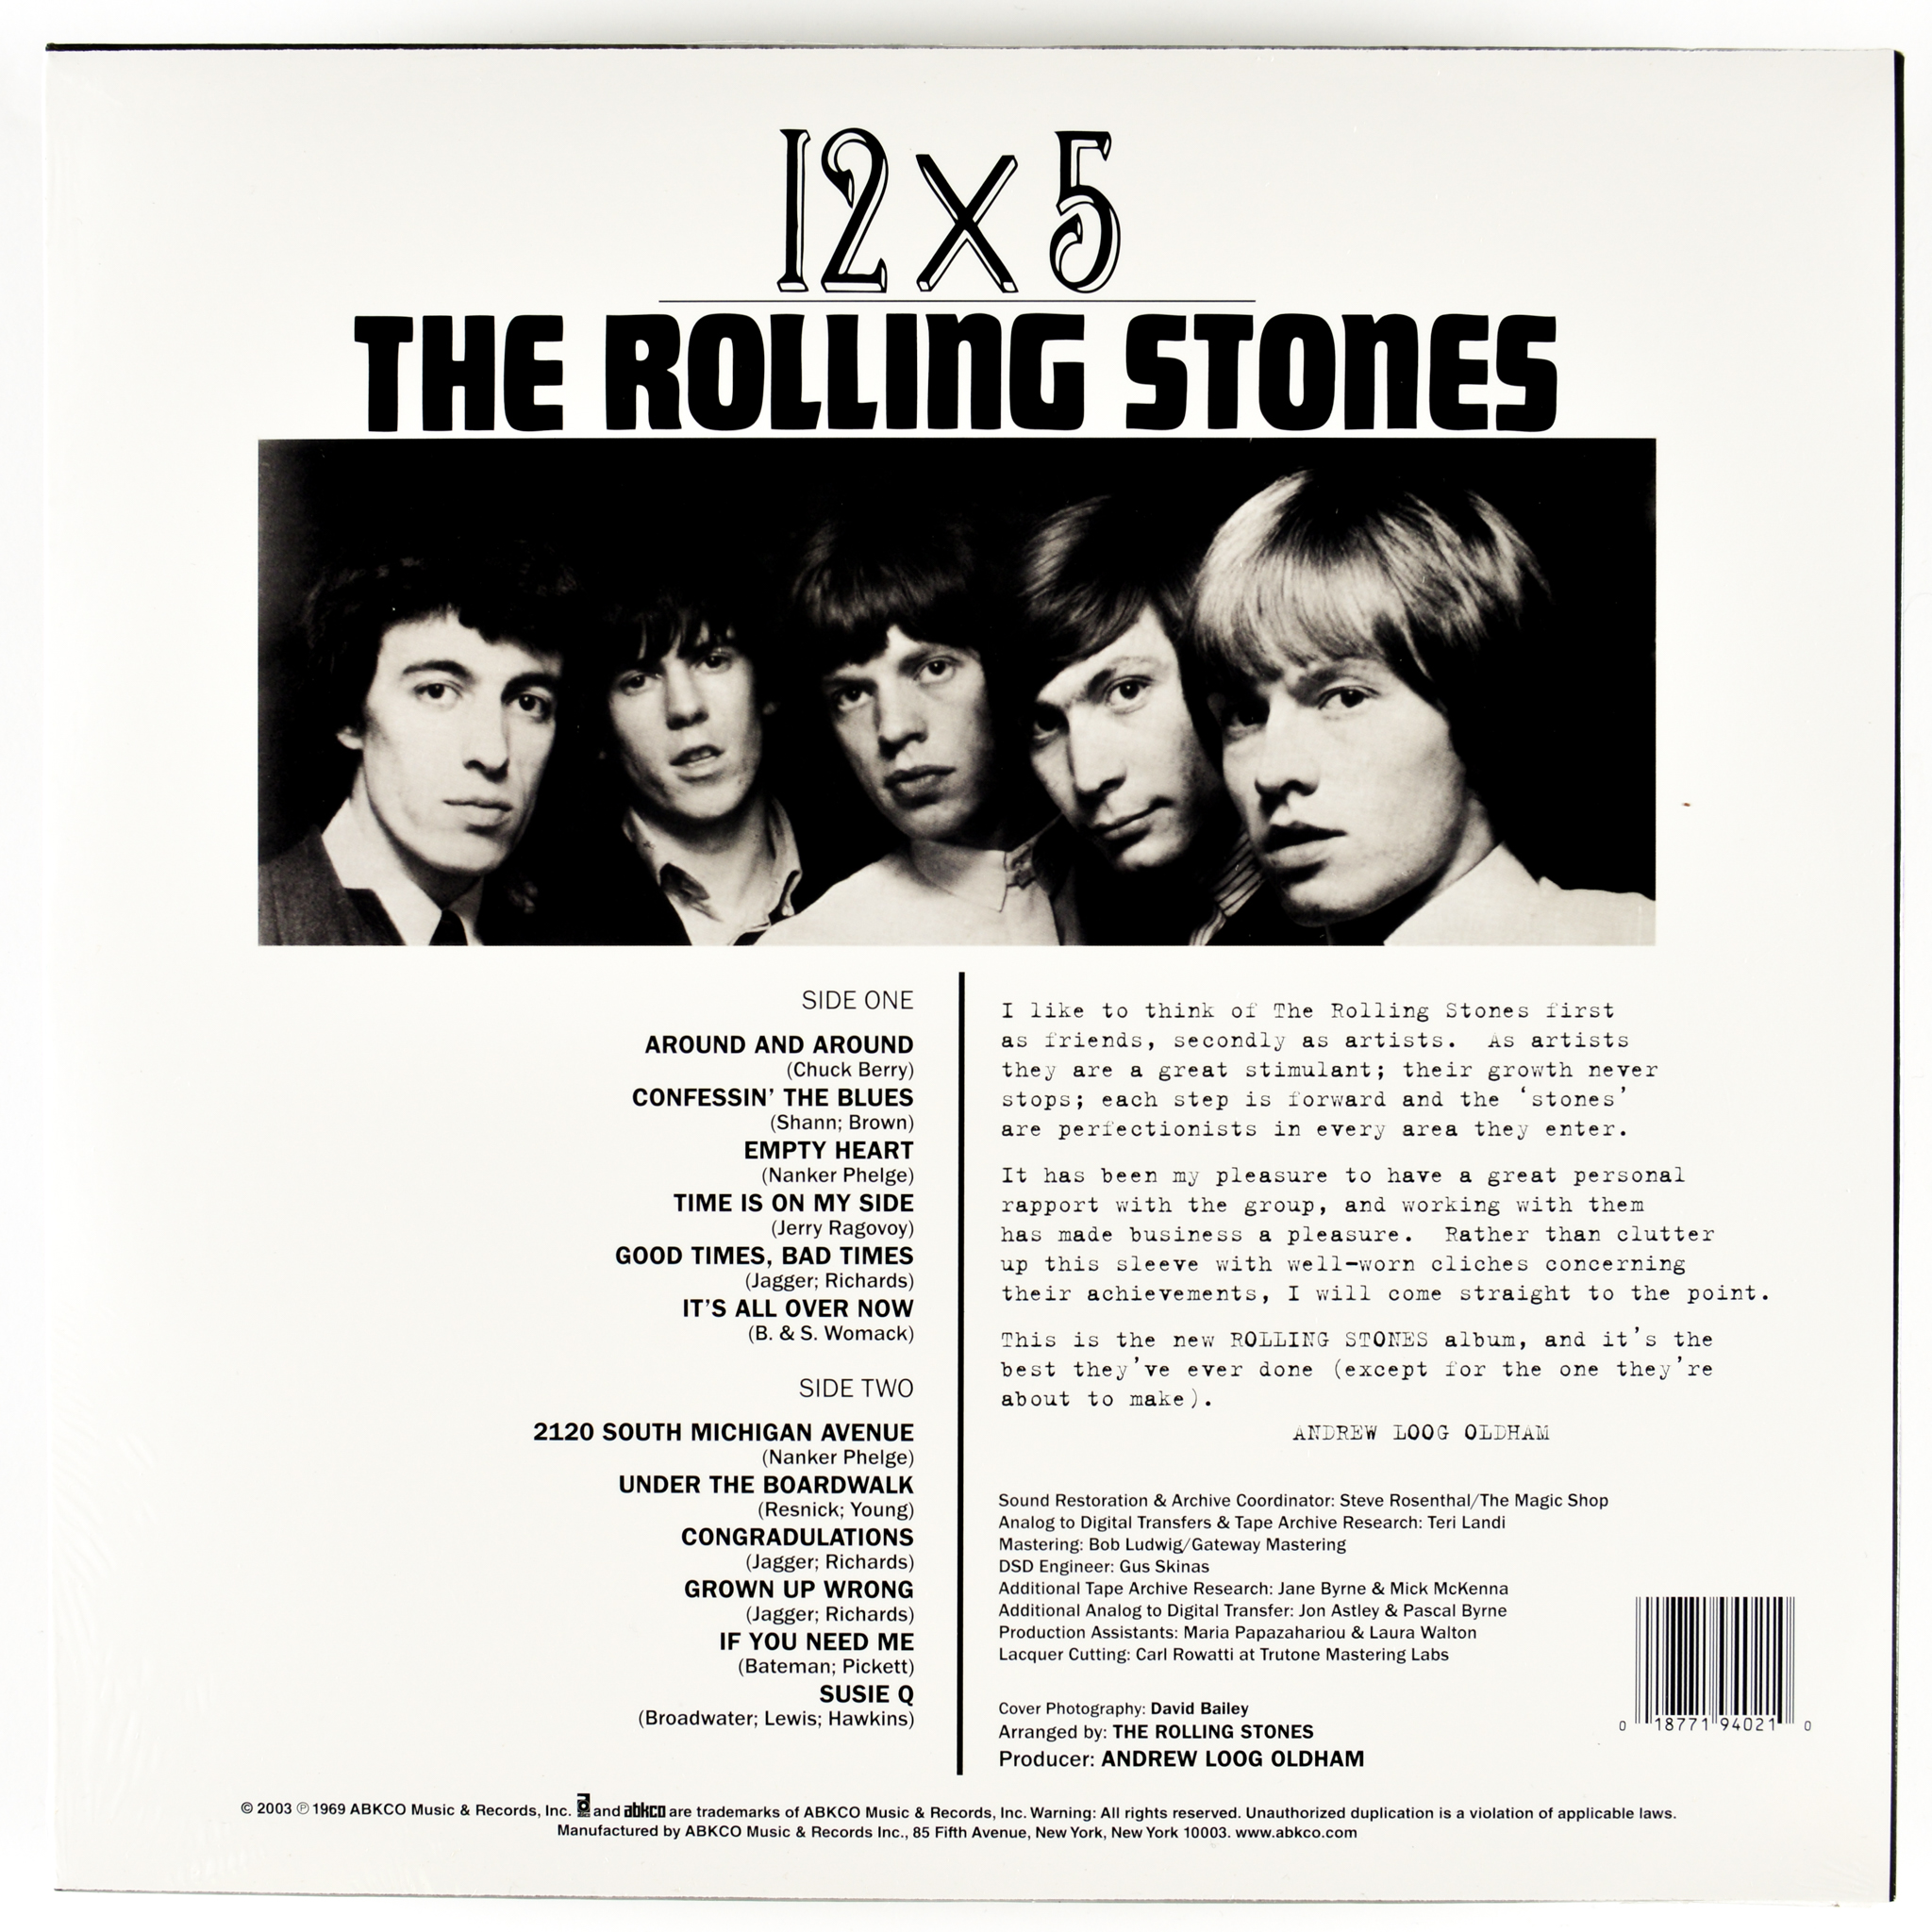 Rolling Stones 12 X 5 Get Hip Recordings